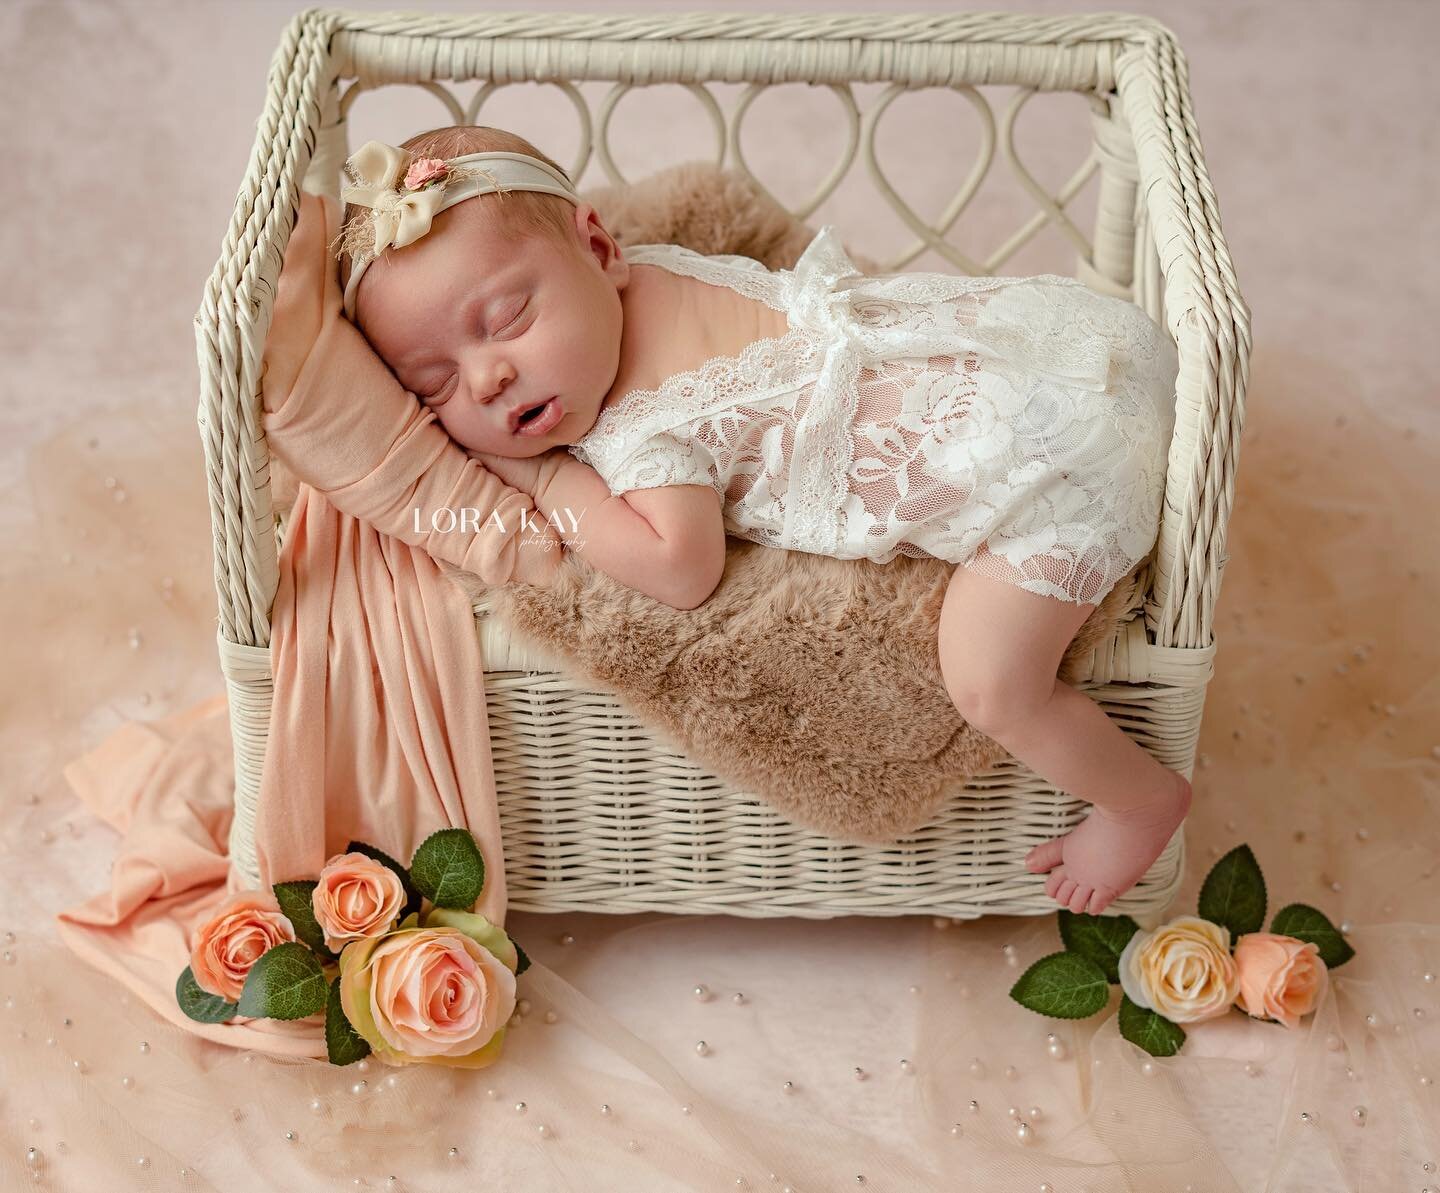 Olivia 💓
#newbornphotography #lorakaynewborn #allrightsreserved #lorakayphotography #newbornphotoshoot #newbornprops #newbornsession #newbornphotographer #explore #explorepage #babyfever #ilovebabies #njphotographer #flphotographer